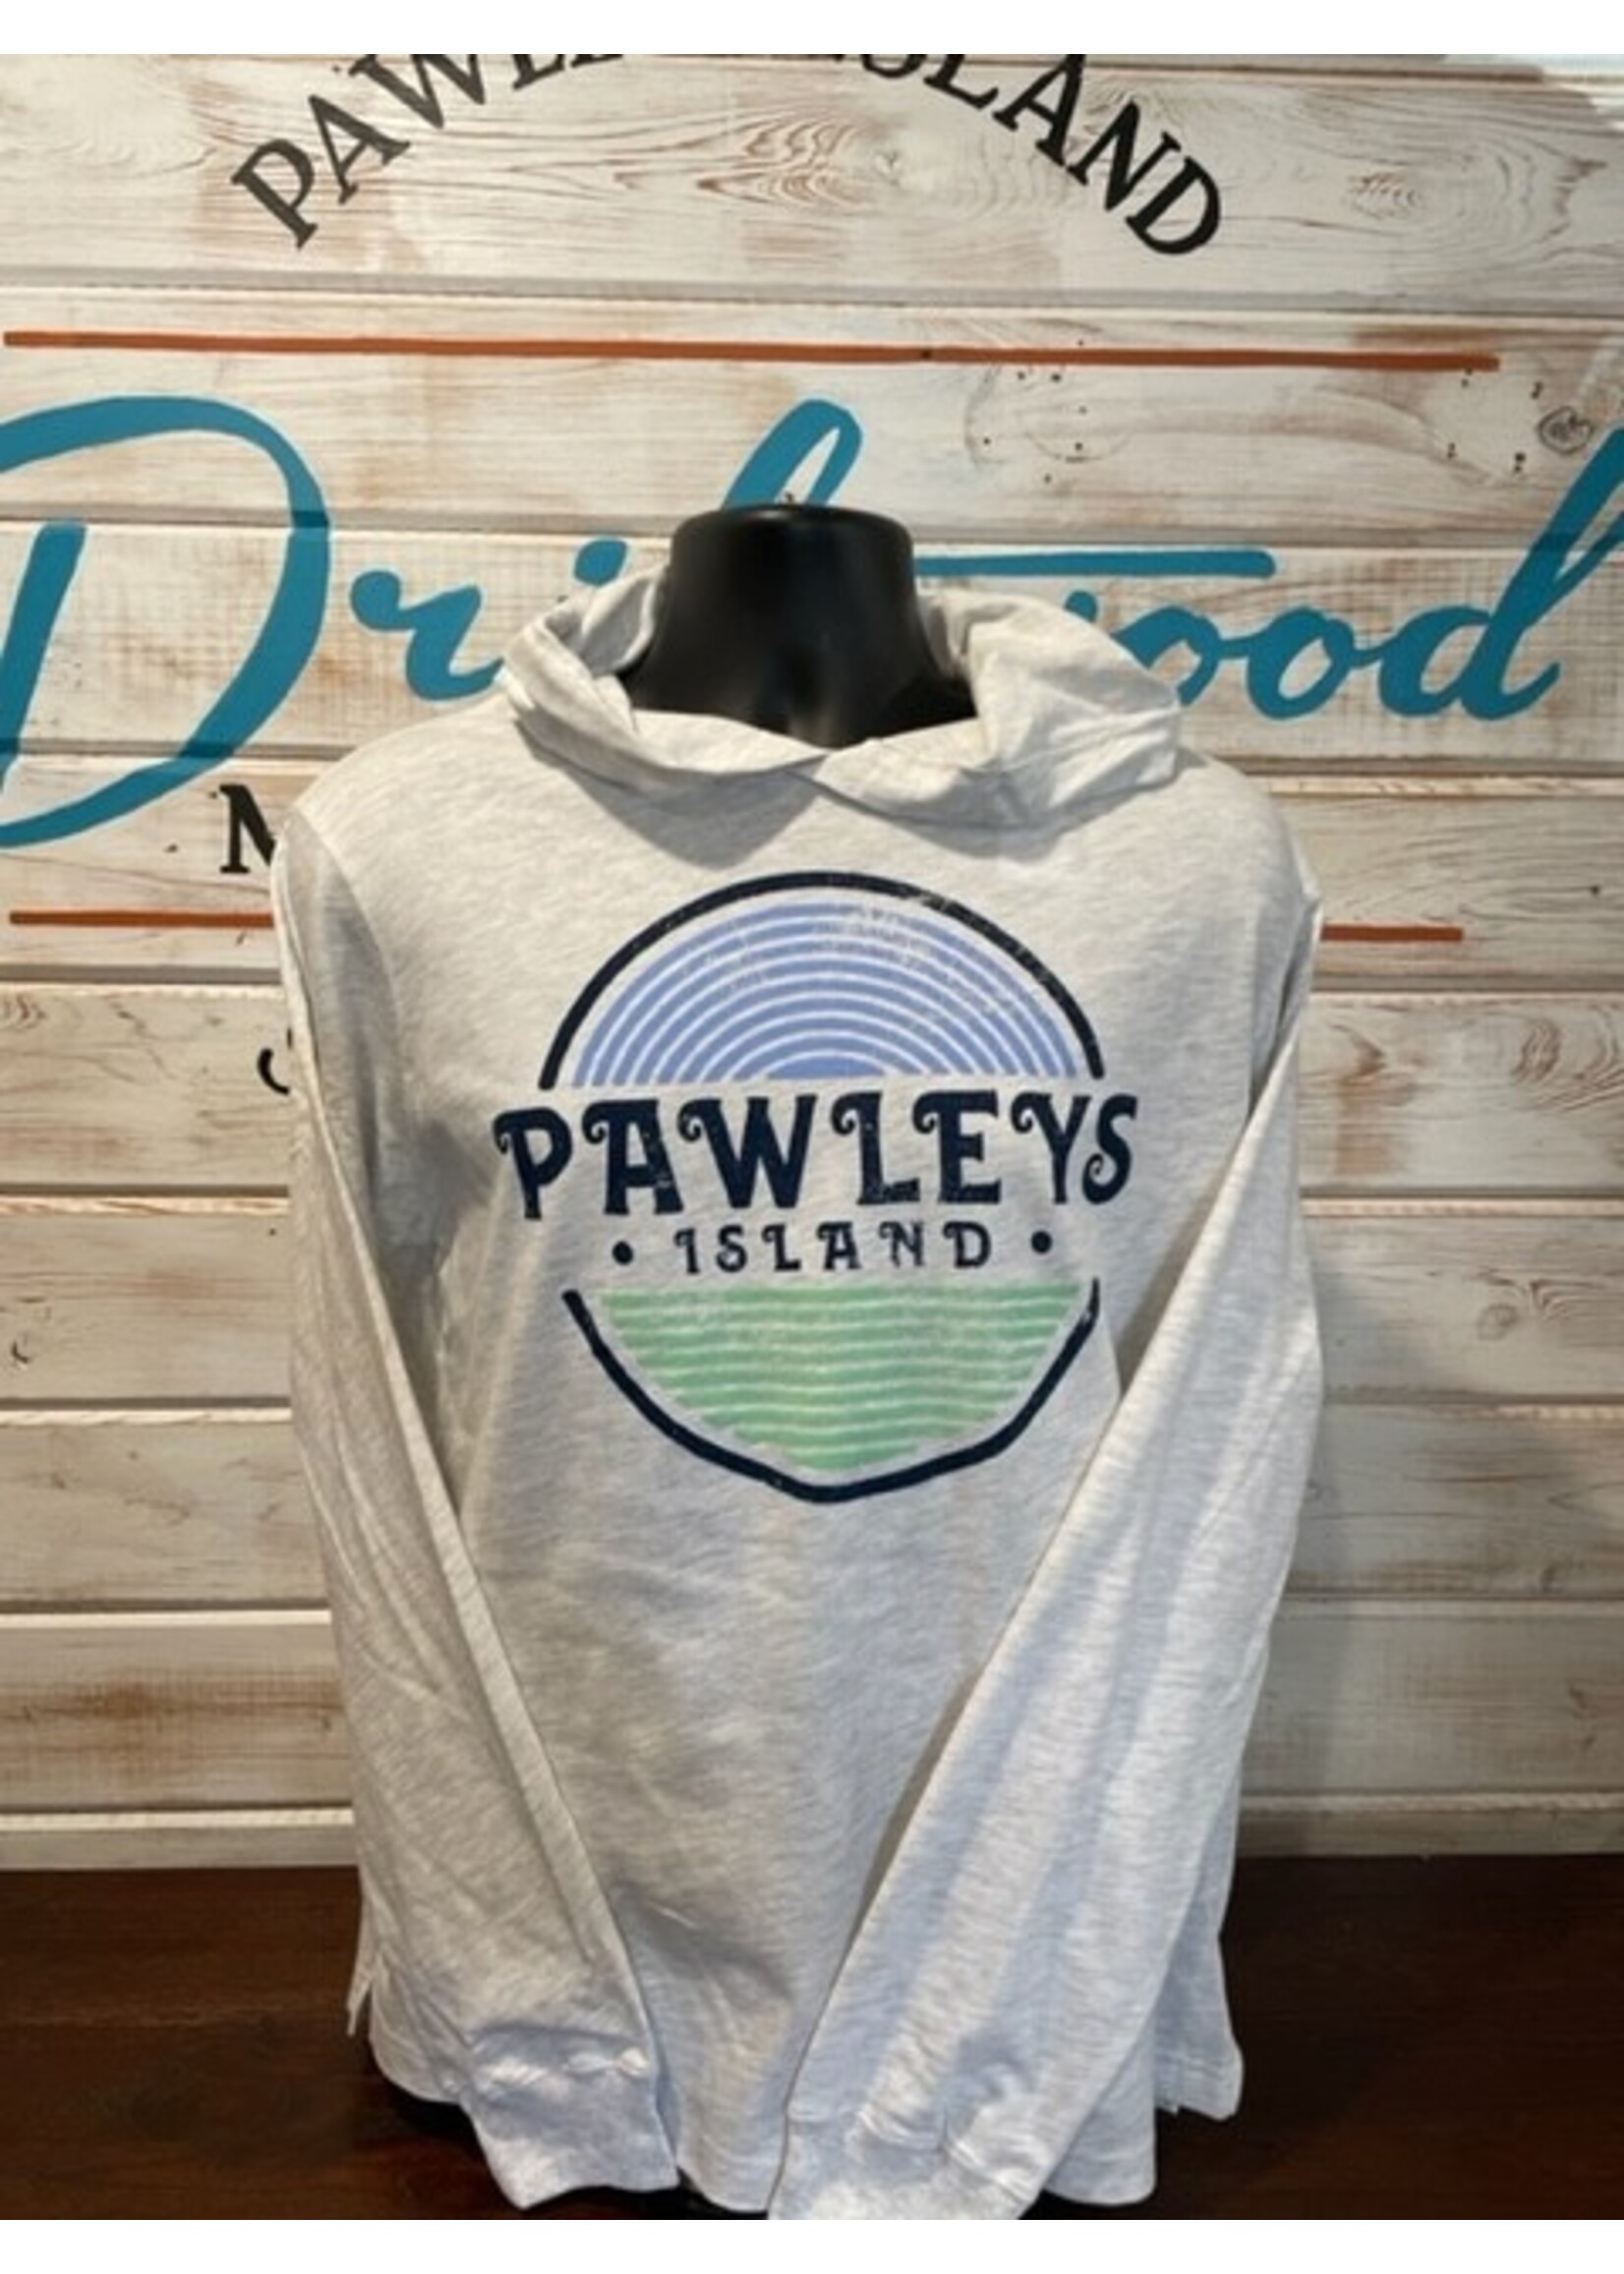 Pawleys Island Outdoors - New PI Outdoors camo hoodies. Come check